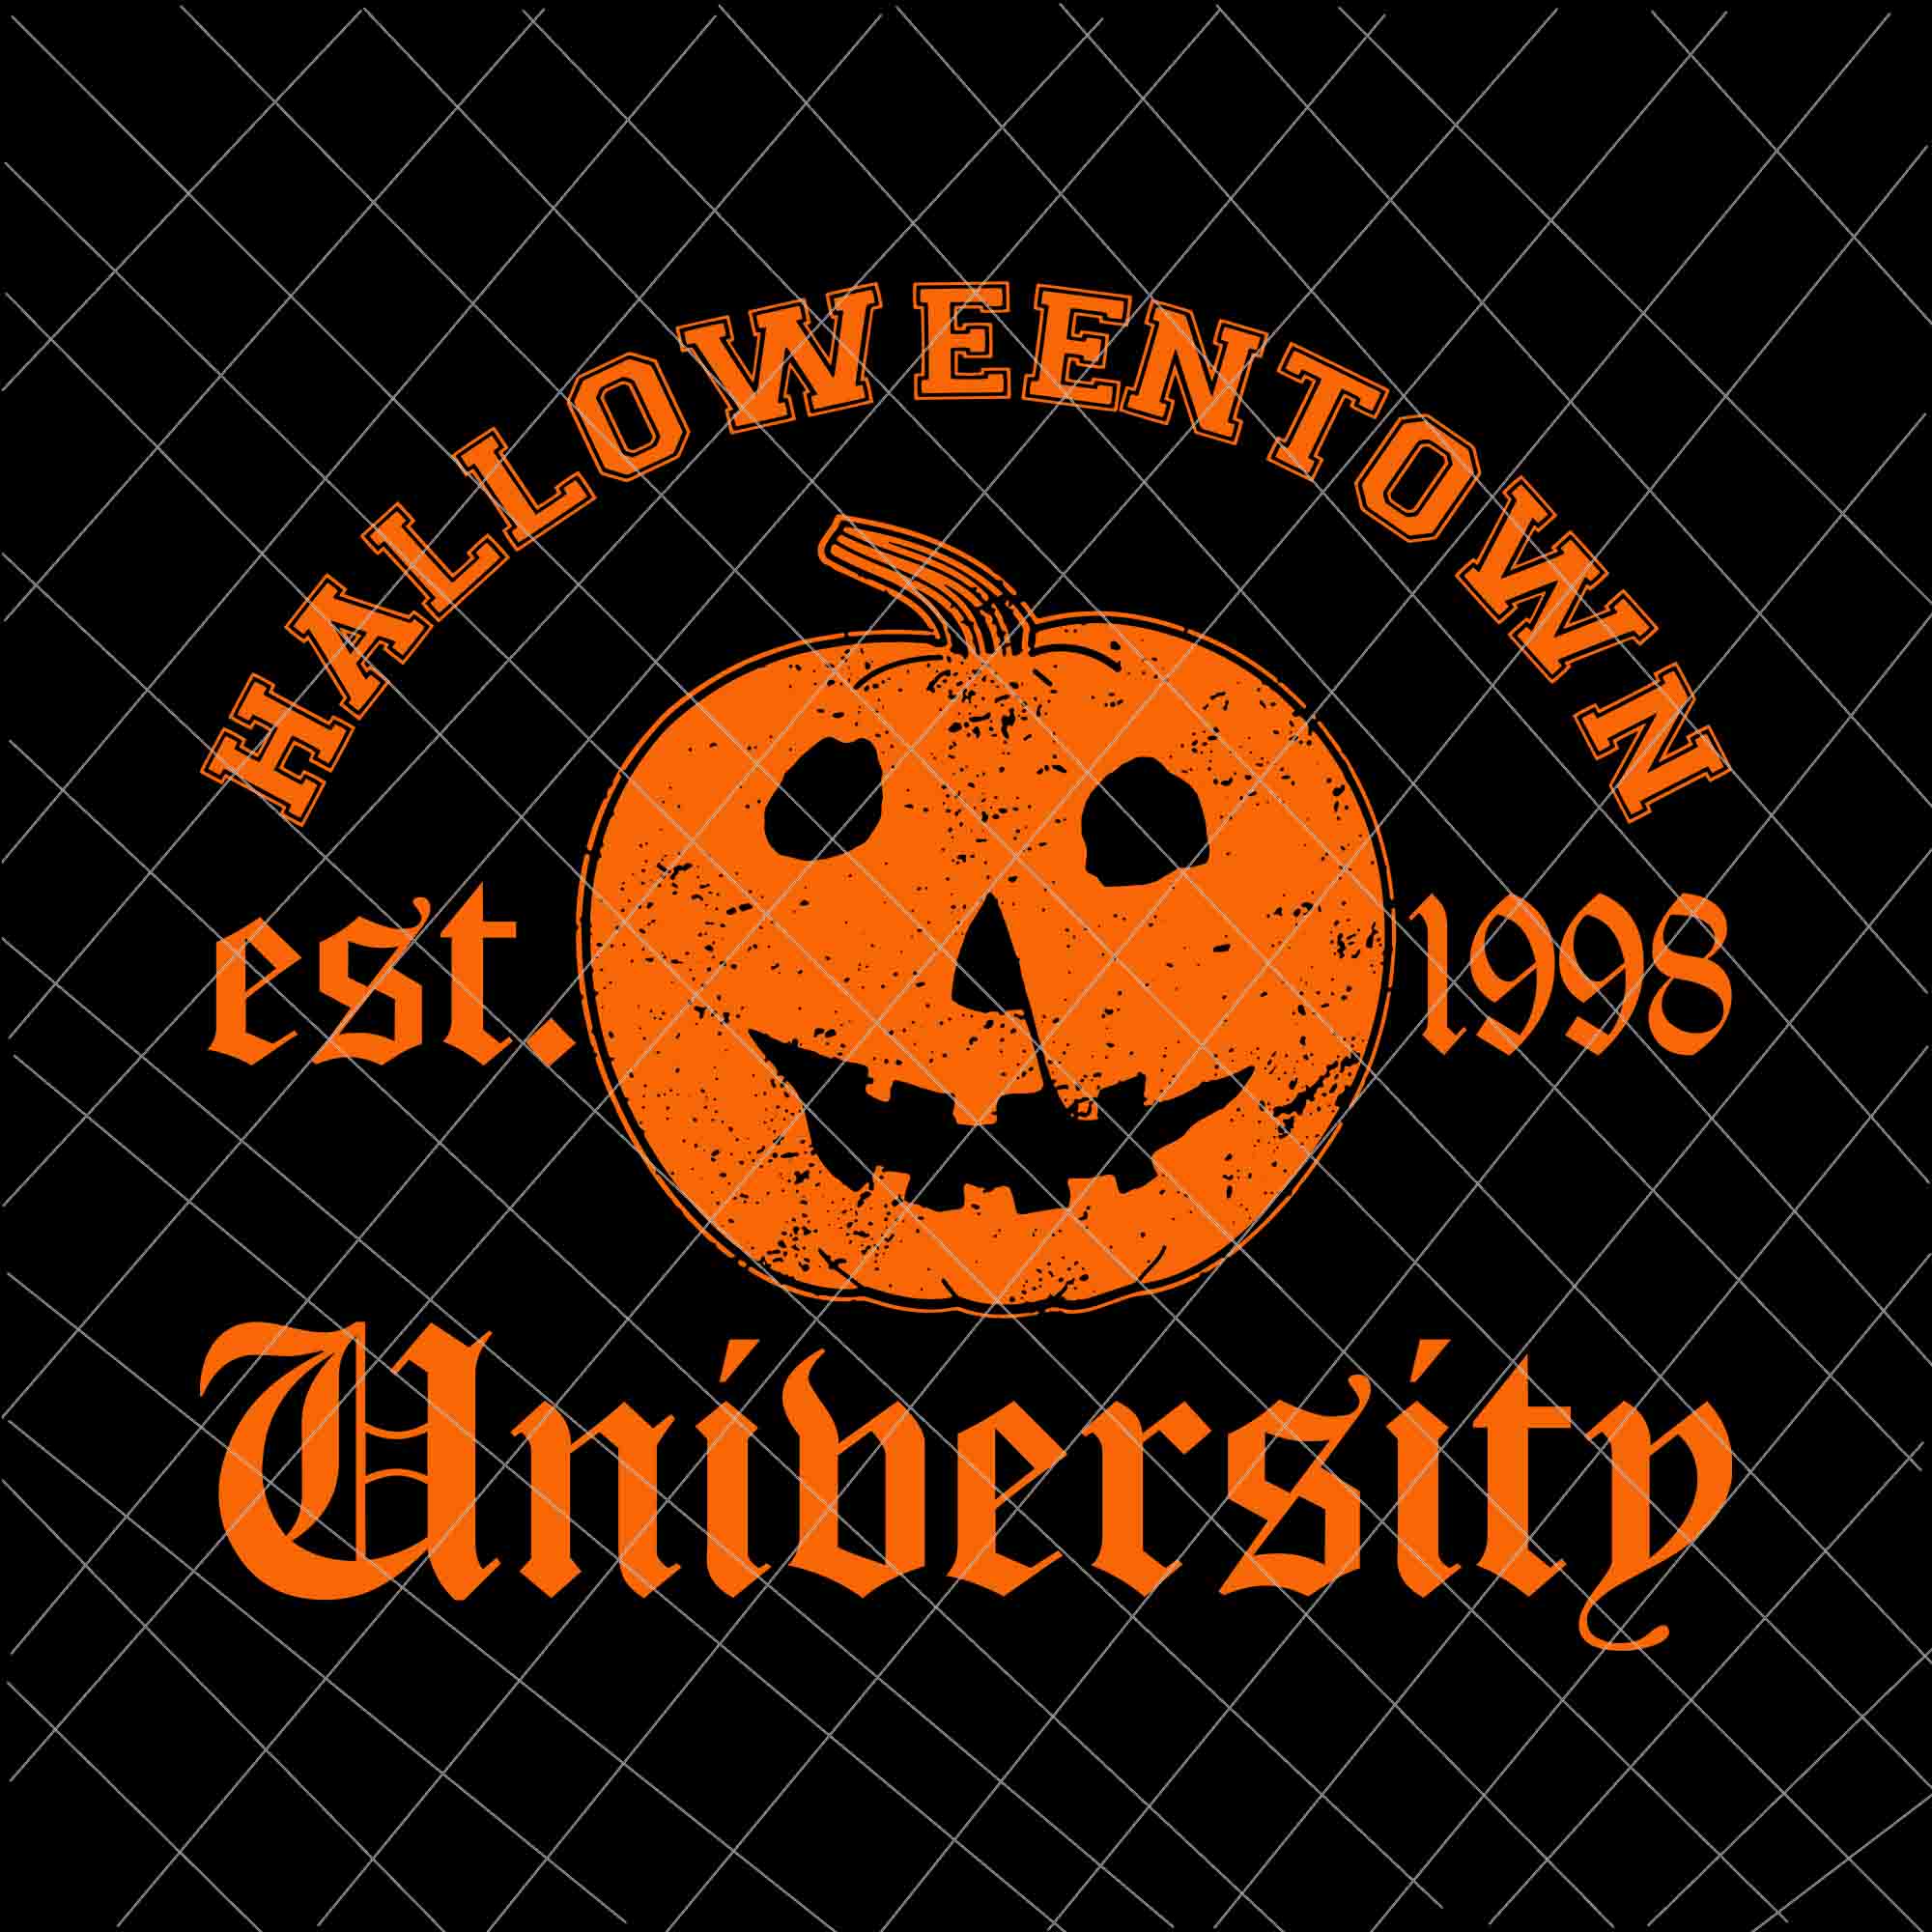 Halloweentown University 1998 Svg, Funny Halloween 1998 Svg, Halloween University Svg, Pumpkin 1998 University